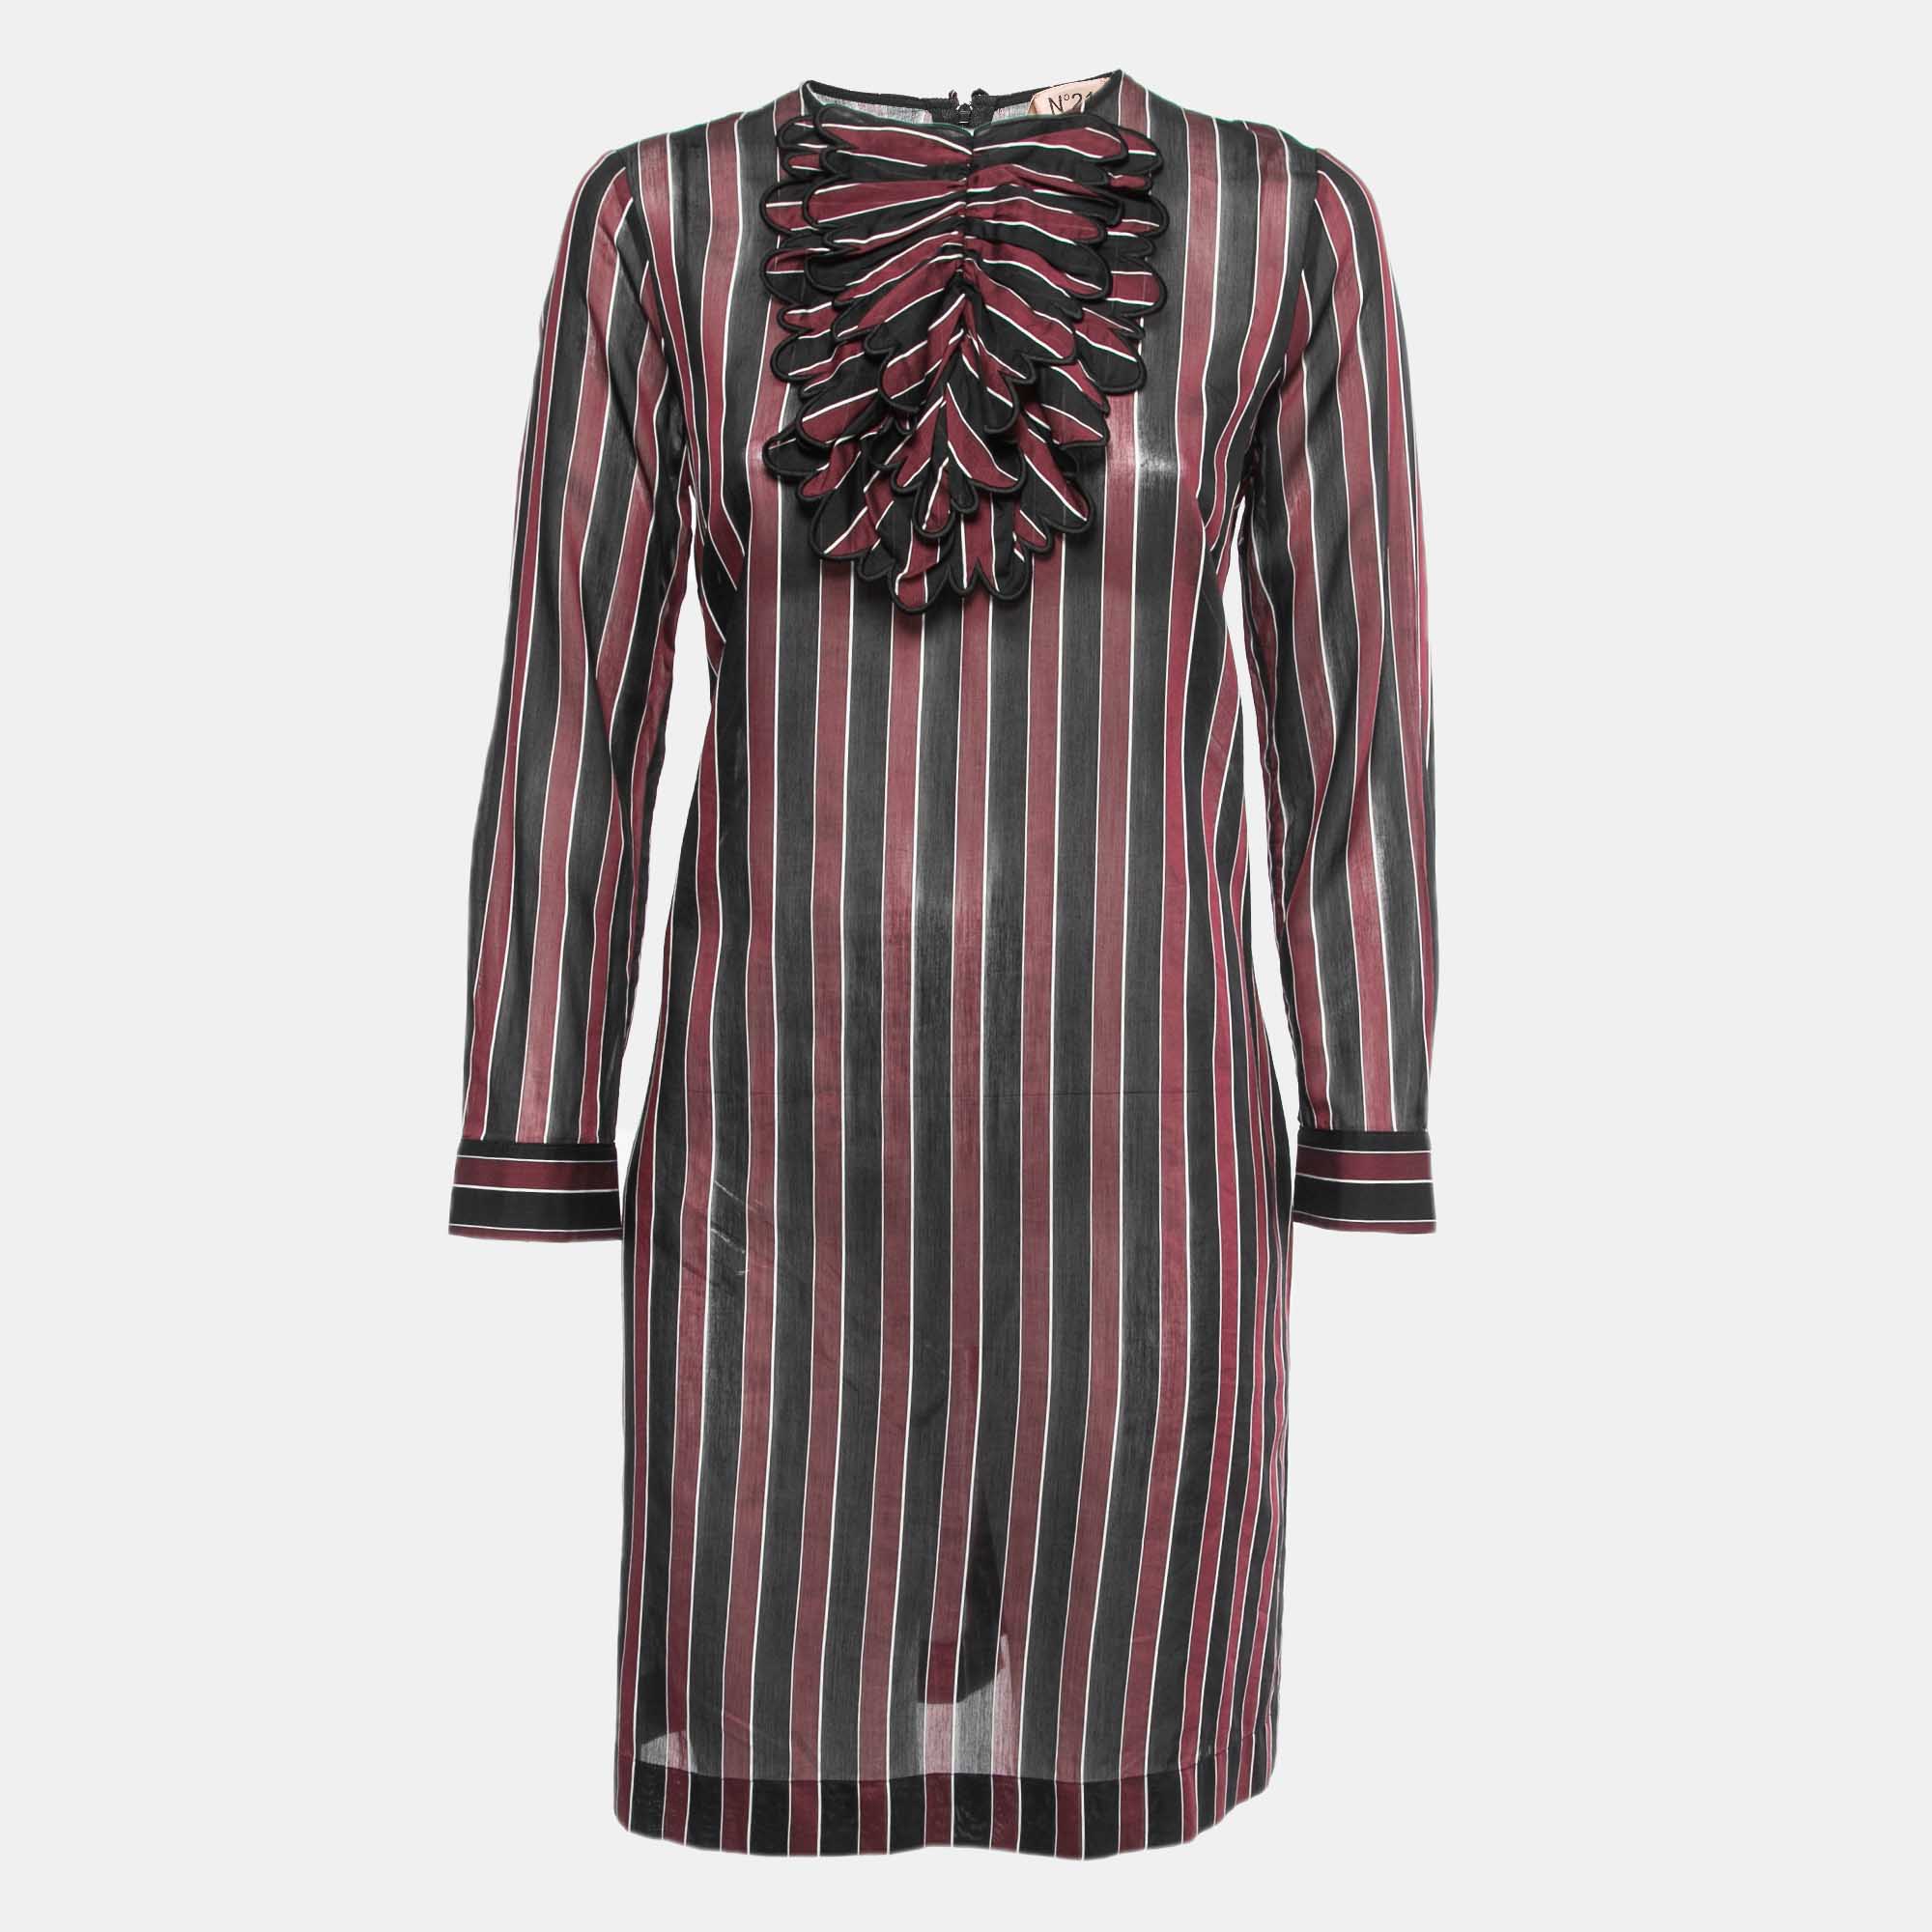 N21 burgundy/black striped cotton blend long sleeve short dress m